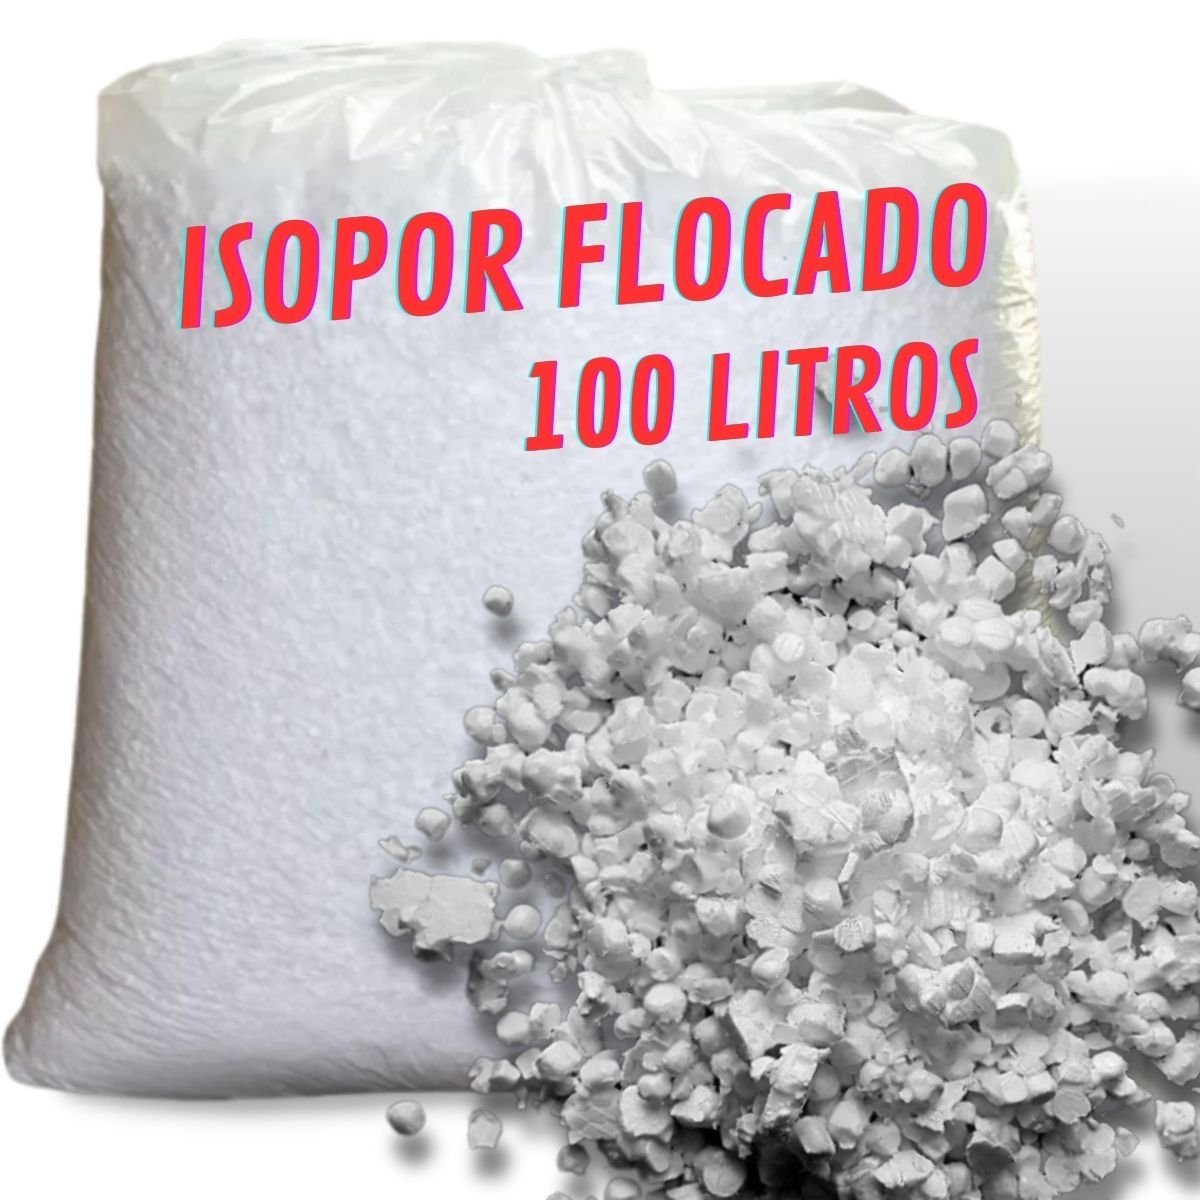 Refil de Isopor Flocado 100 Litros para Enchimento de Puffs Almofadas Bichos de Pelúcia Artesanato M - 1